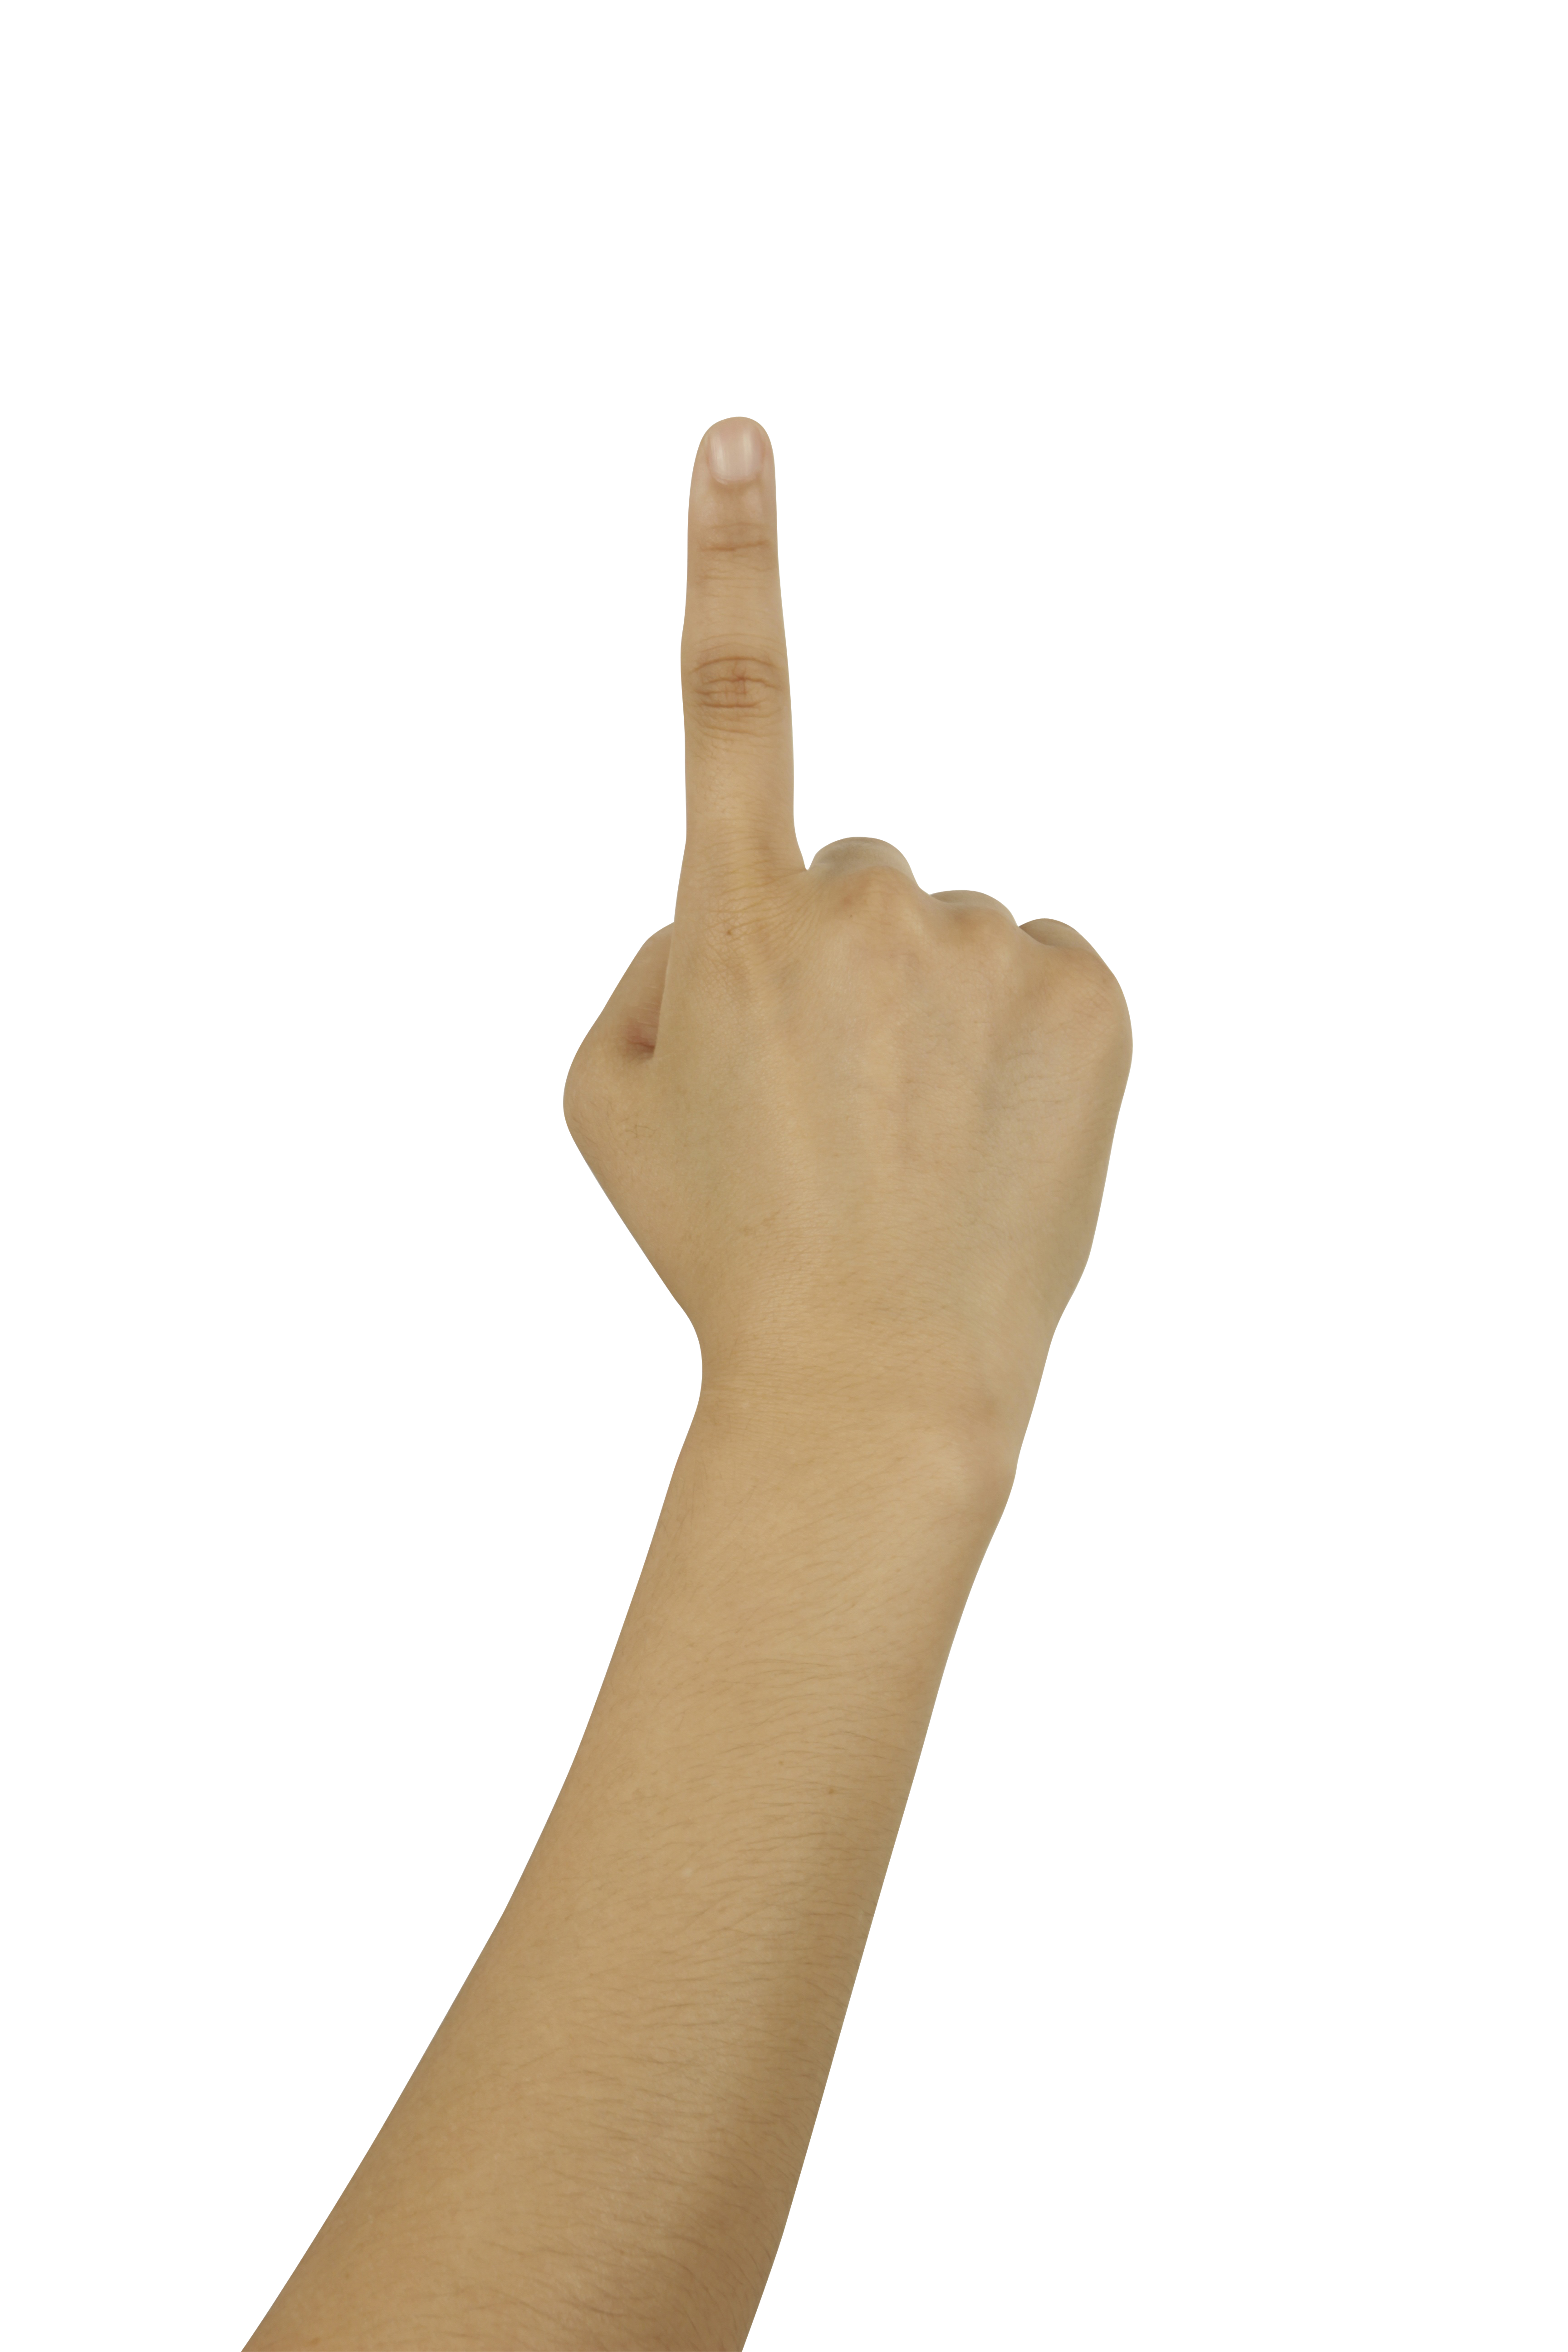 Finger Pointing Upward PNG Image